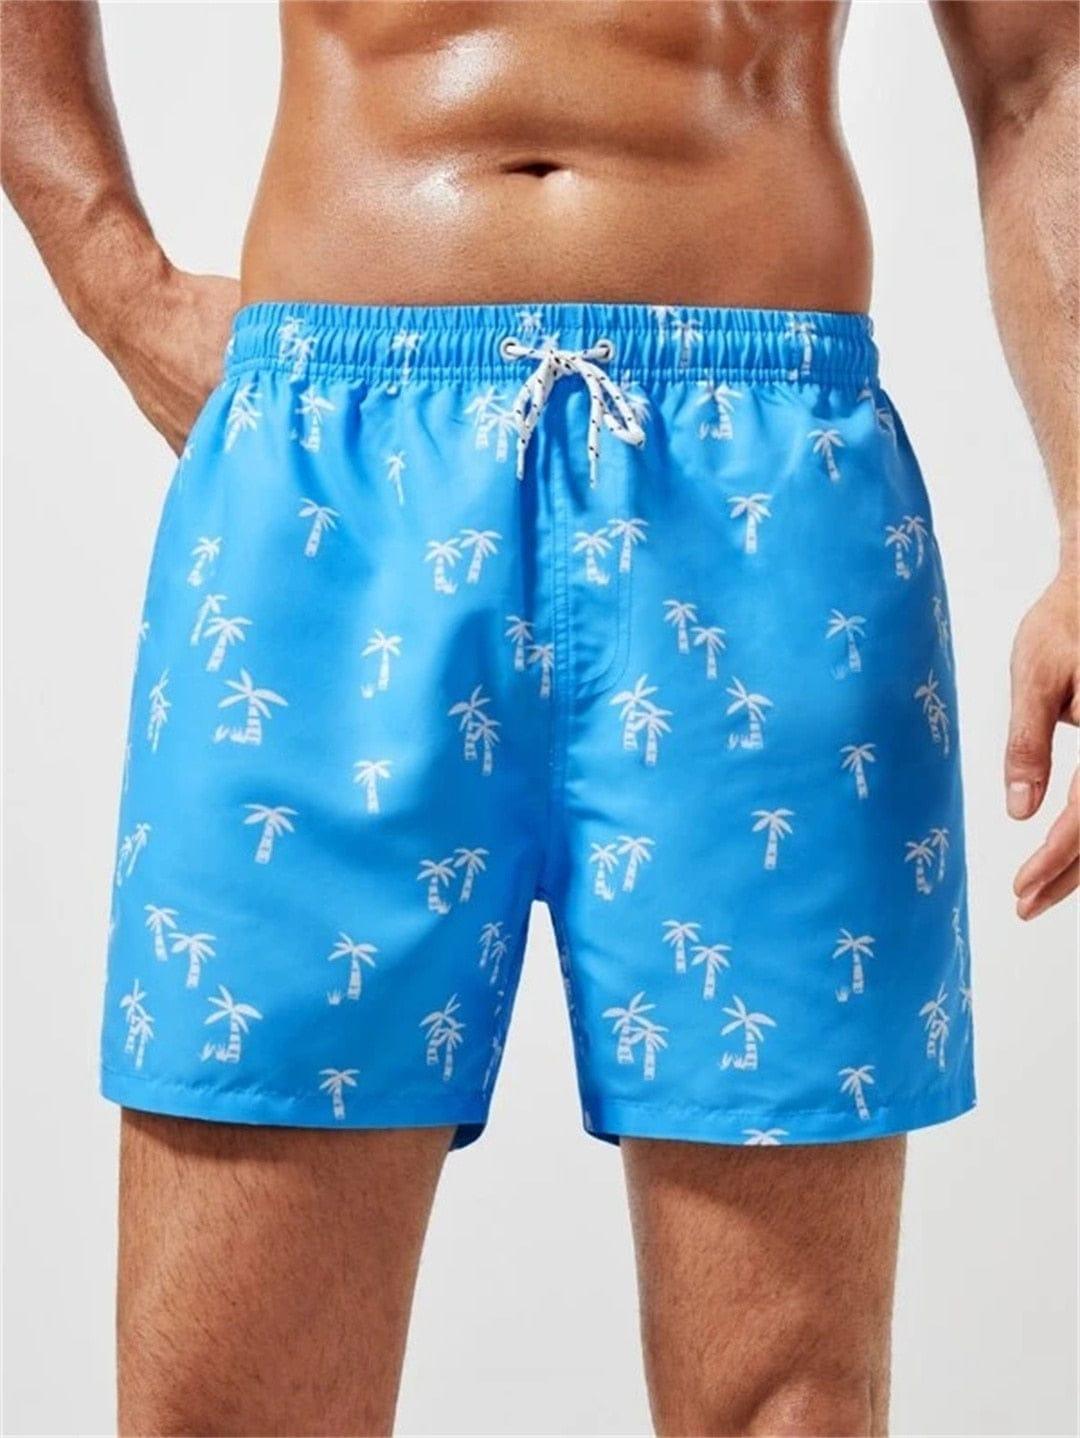 David swim shorts trunks (Plus sizes) Verso Blue S 